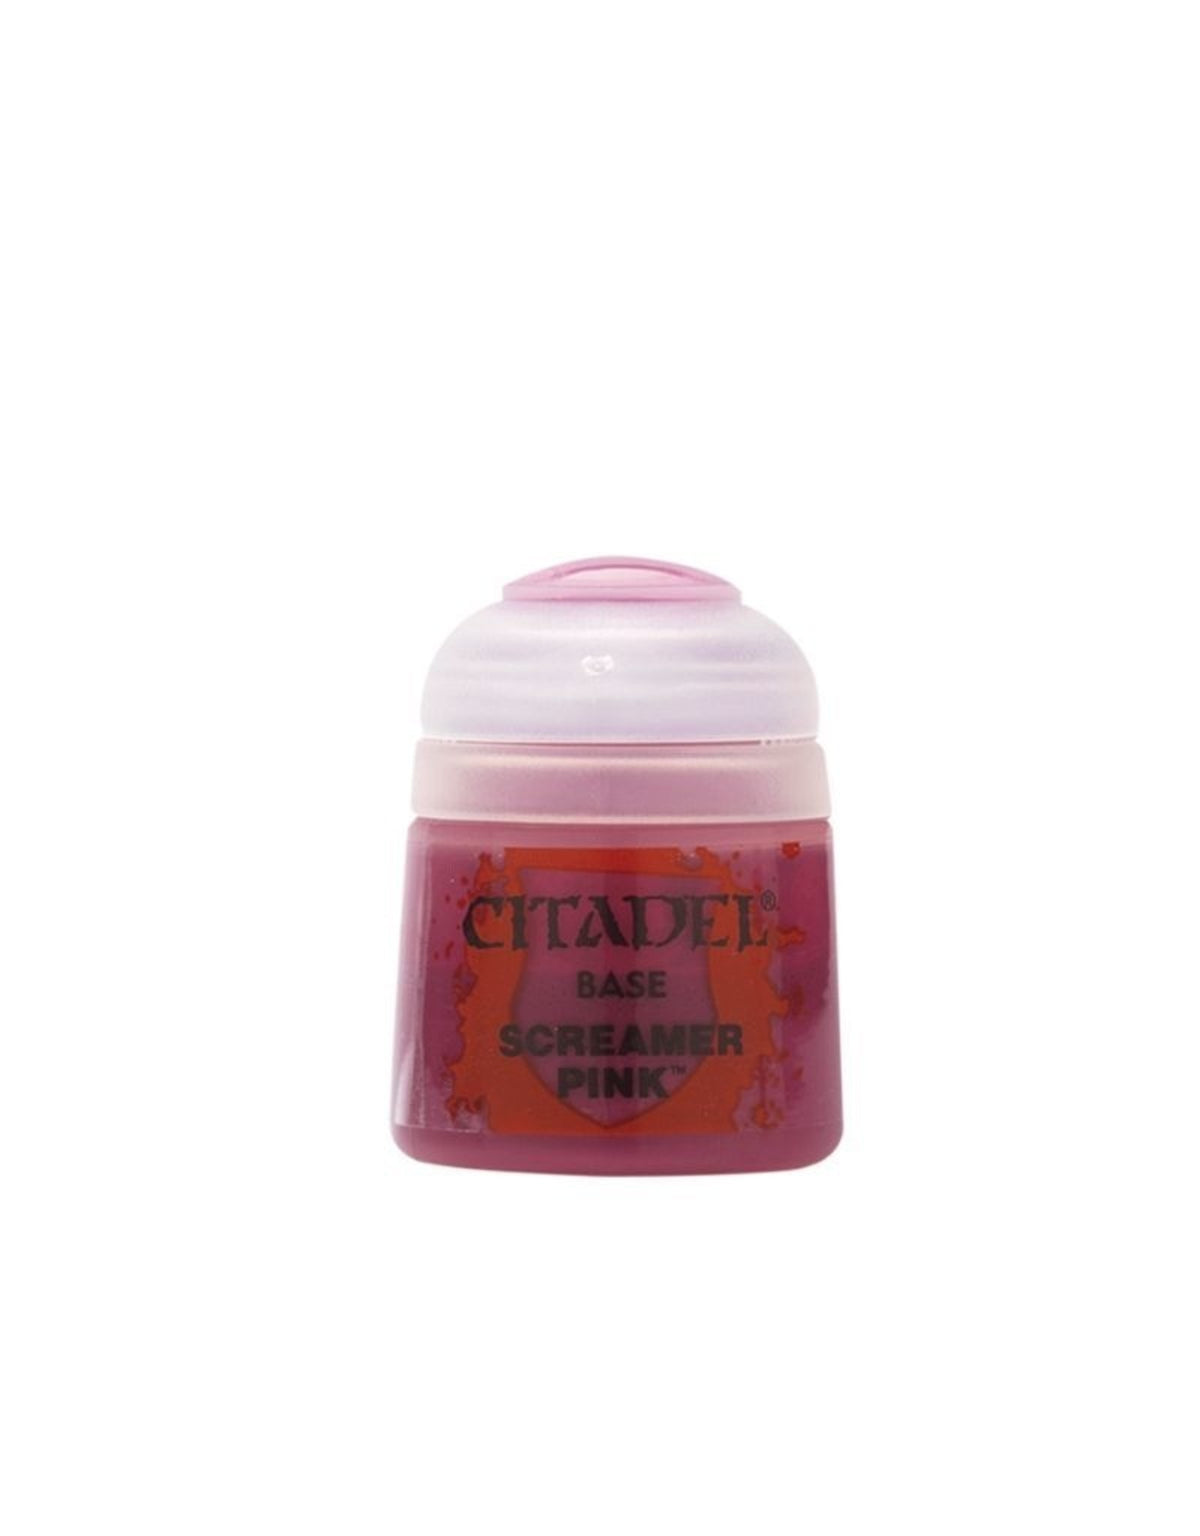 Citadel Base Paint - Screamer Pink 12ml (21-33)